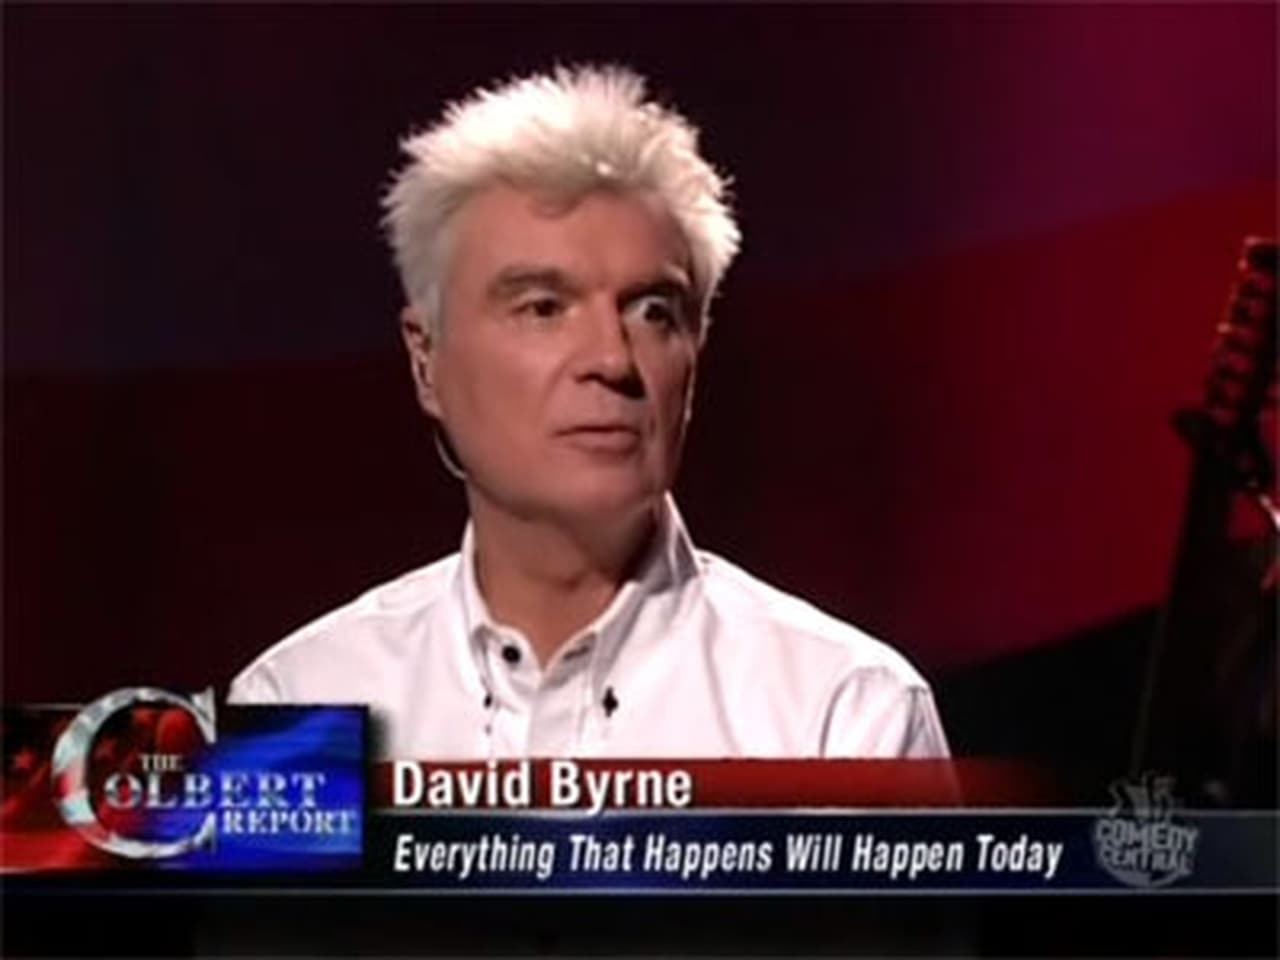 The Colbert Report - Season 5 Episode 29 : David Byrne